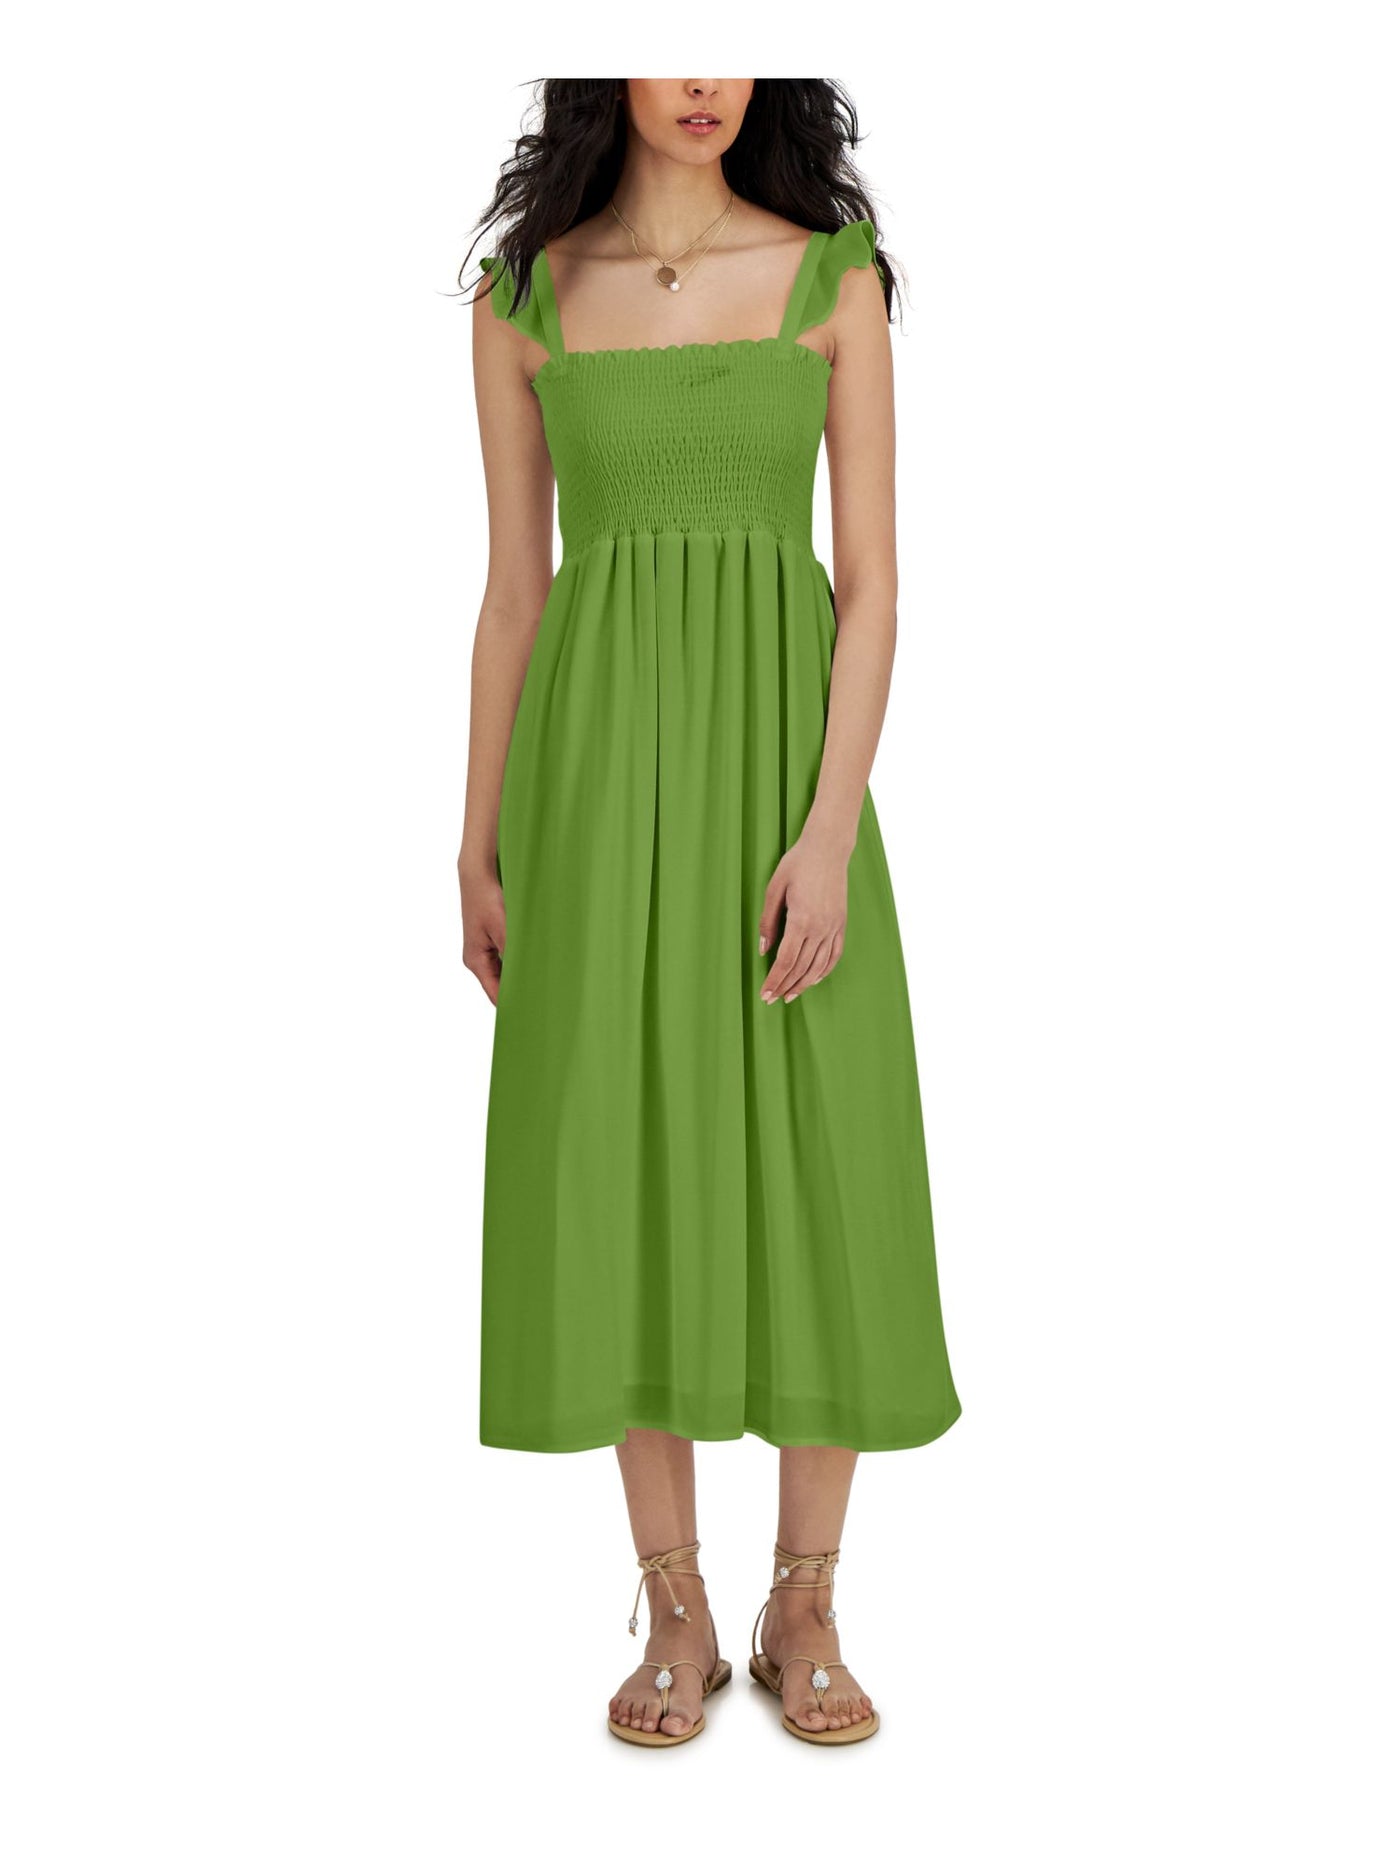 INC DRESSES Womens Green Smocked Ruffled Pullover Sleeveless Square Neck Midi Fit + Flare Dress 8